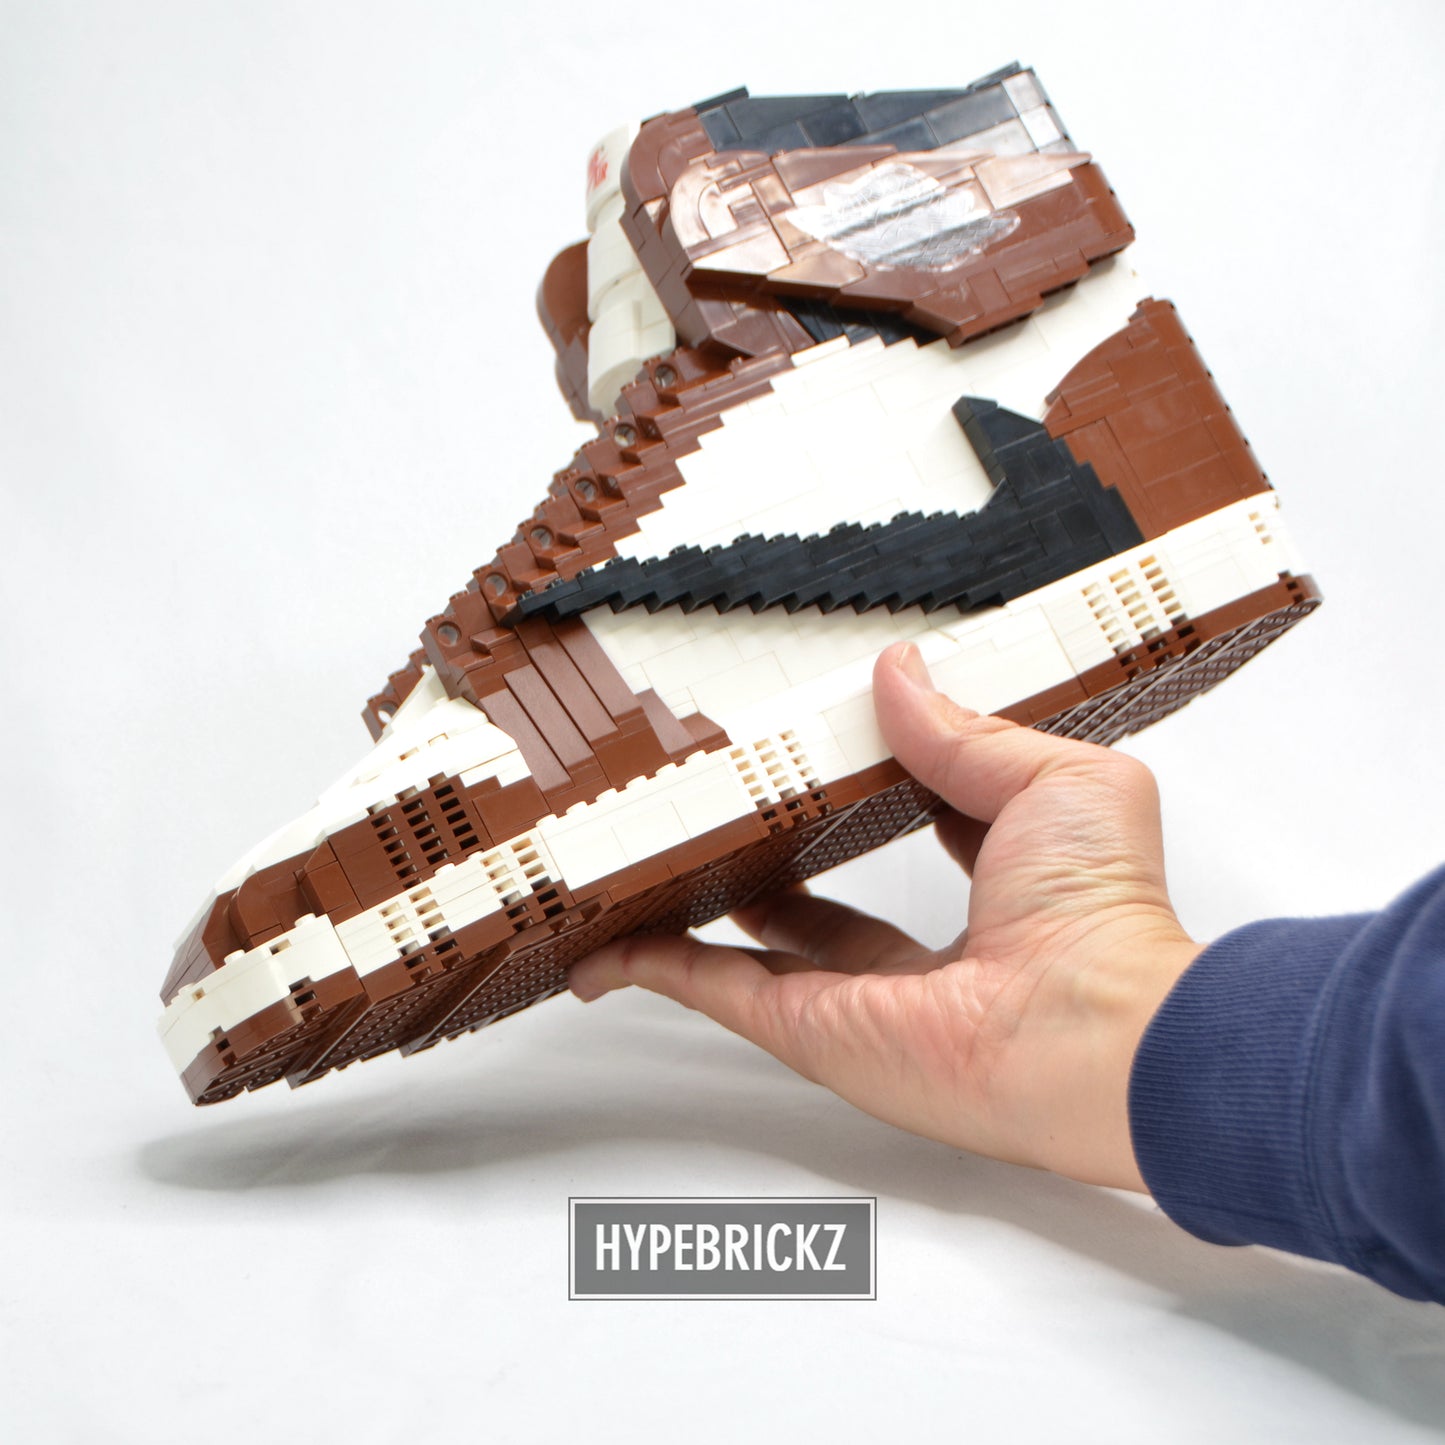 EXTRA LARGE AJ1 "Travis Scott OG" Sneaker Bricks Sneaker 3D Puzzle Building Toy with Mini Figure